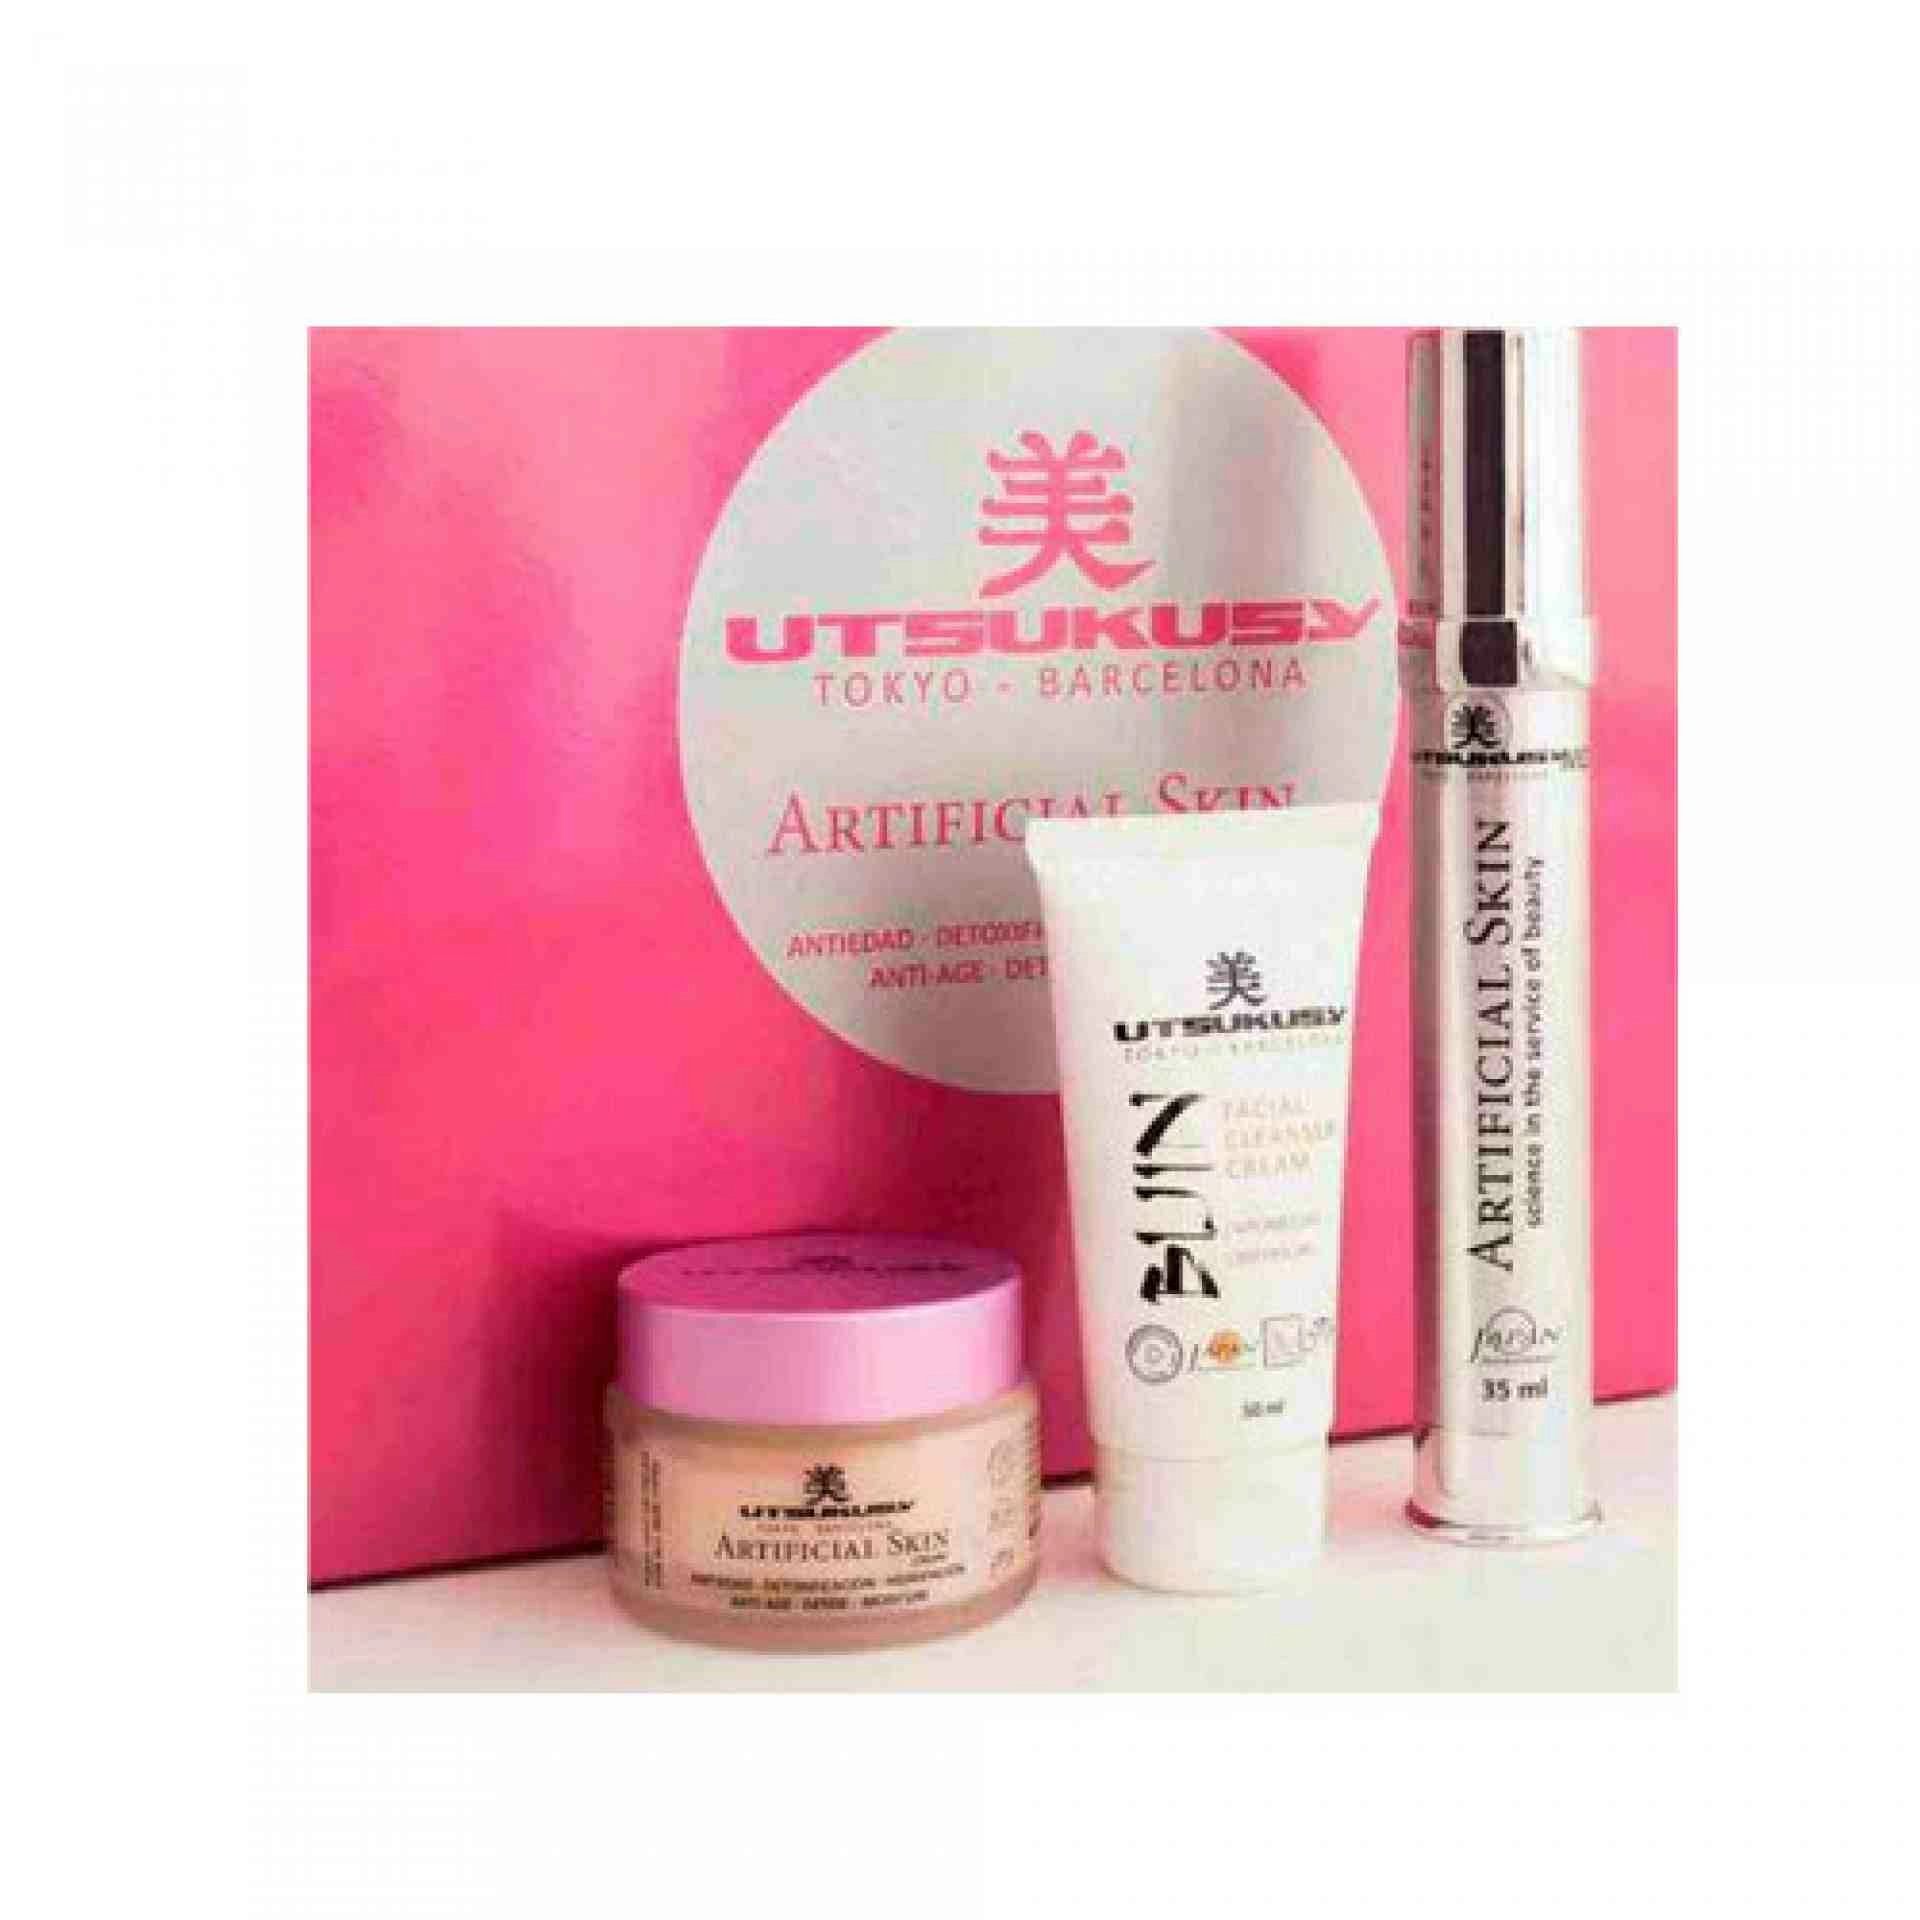 Kit Artificial Skin | Crema y Serum Artificial Skin + Crema depuradora Bijin – Utsukusy ®